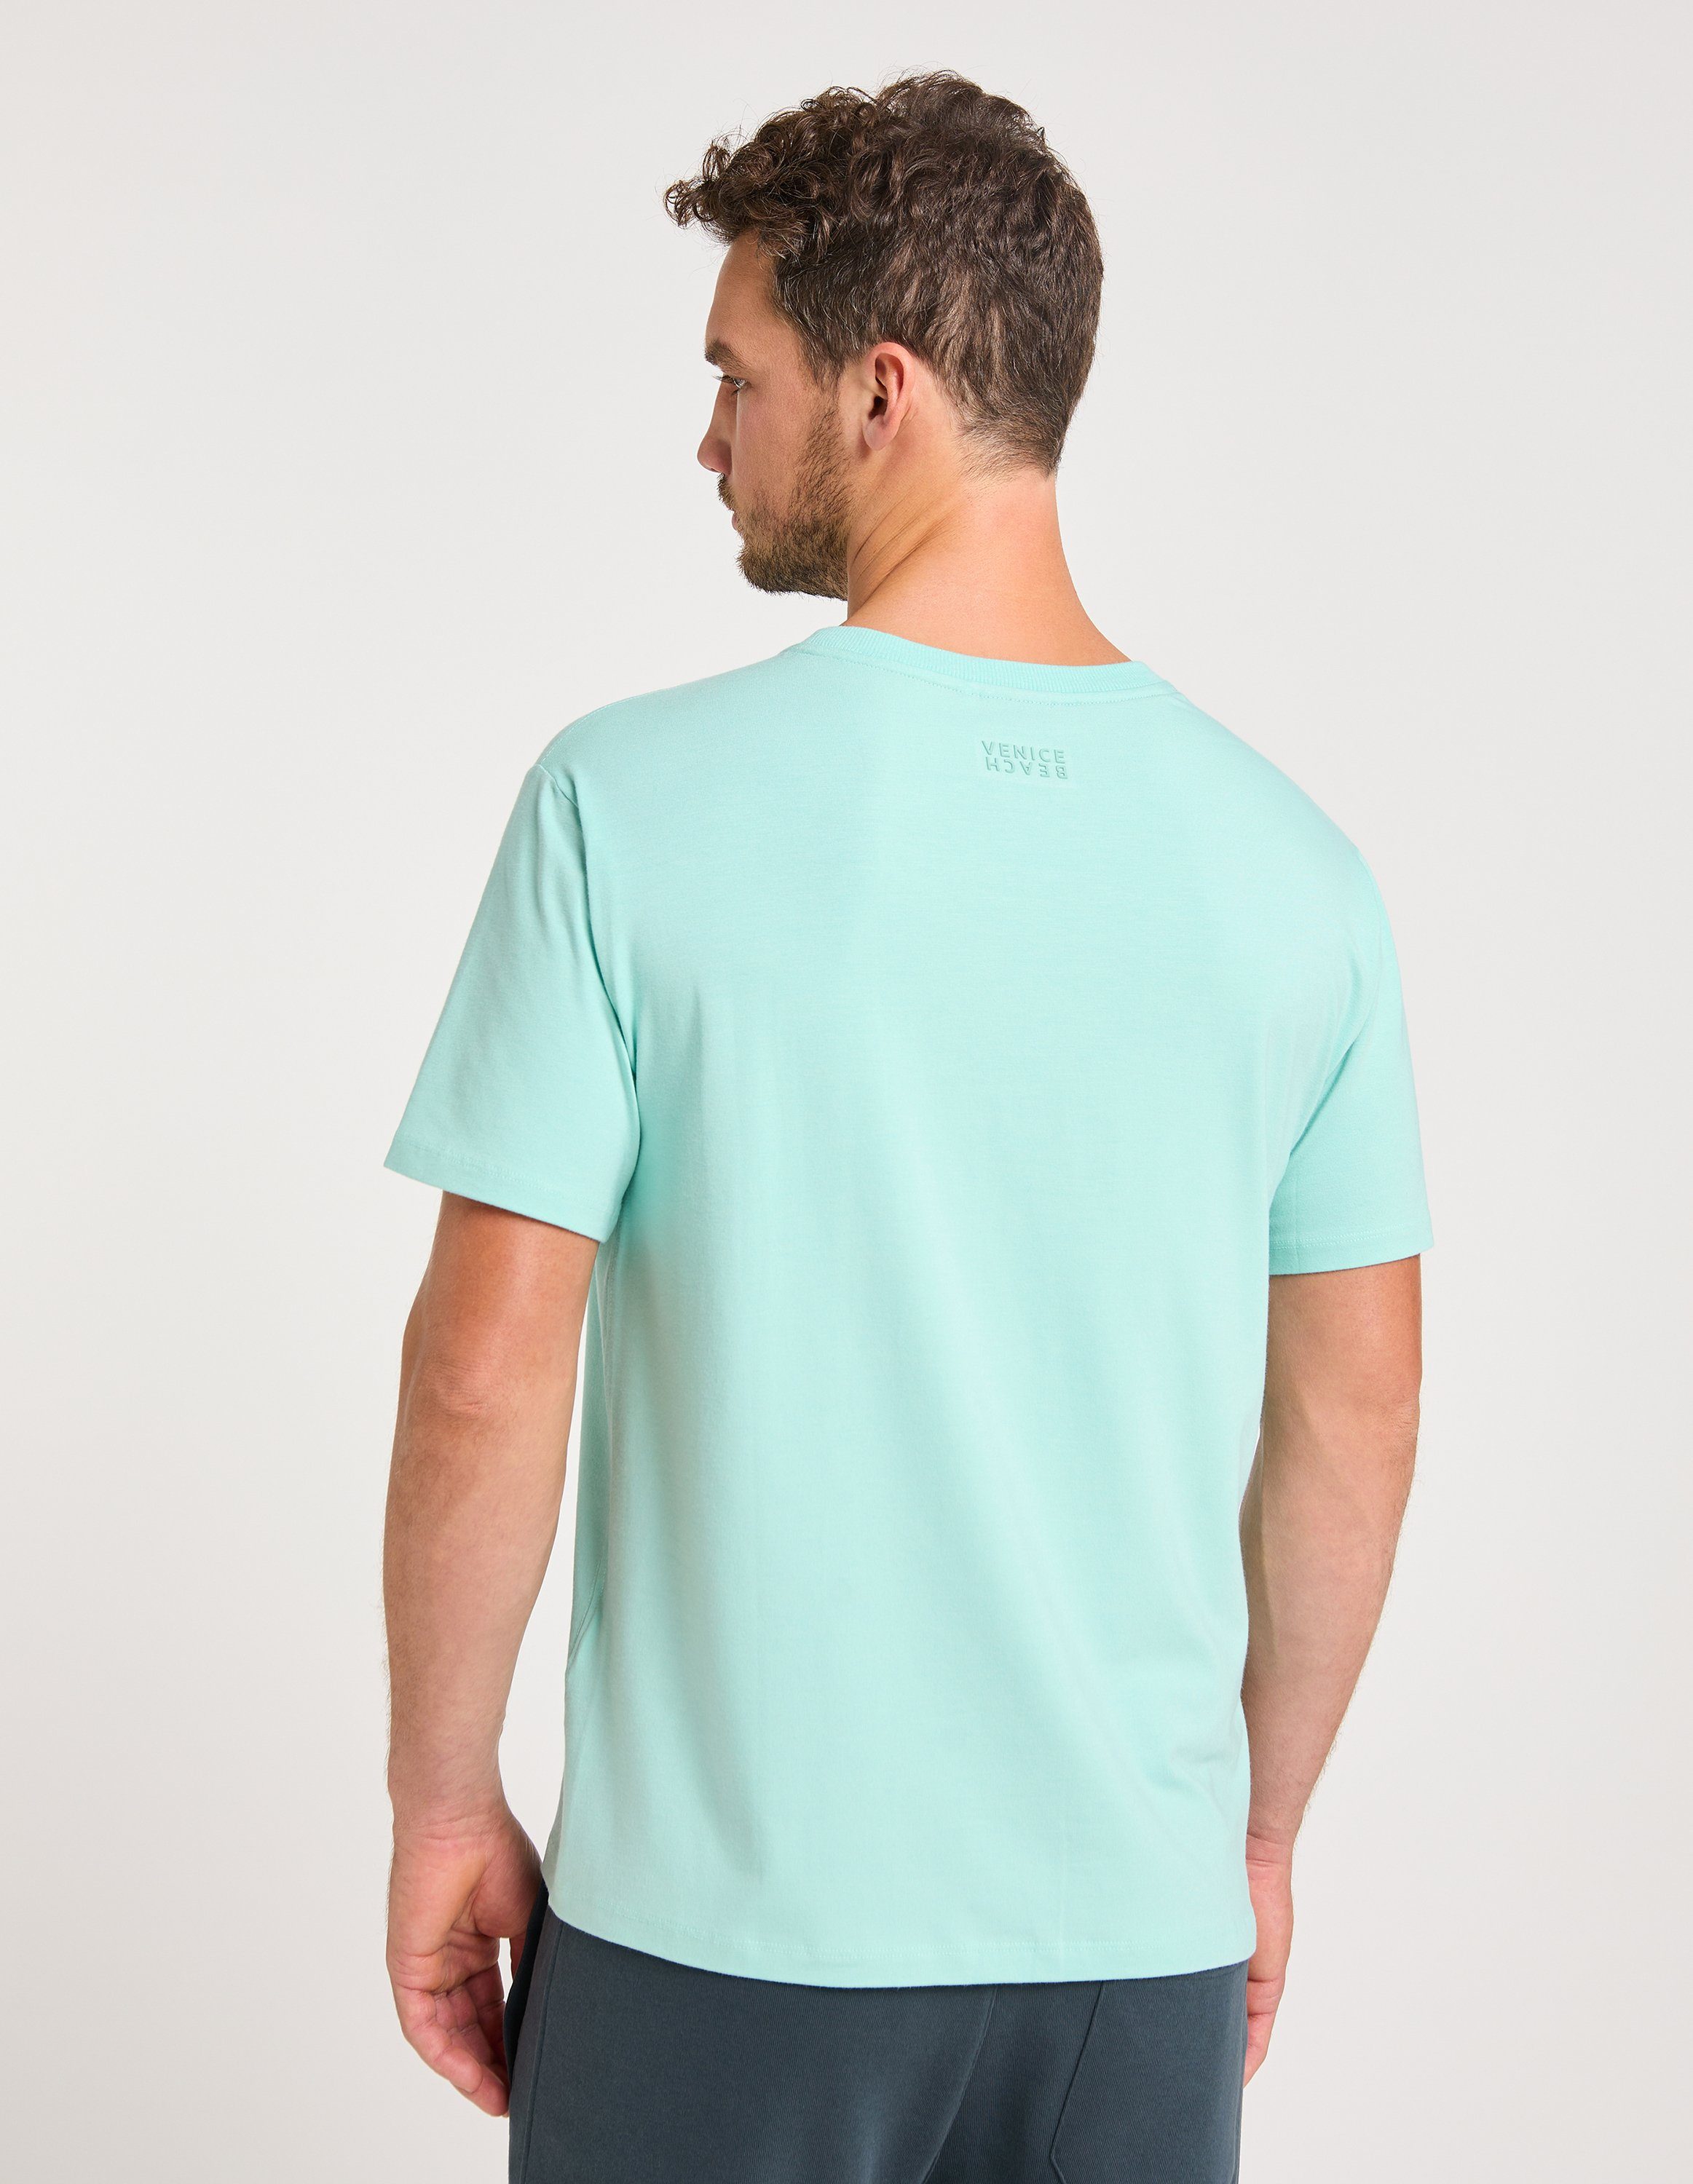 Venice Beach T-Shirt Men BRETT T-Shirt VB haze aqua